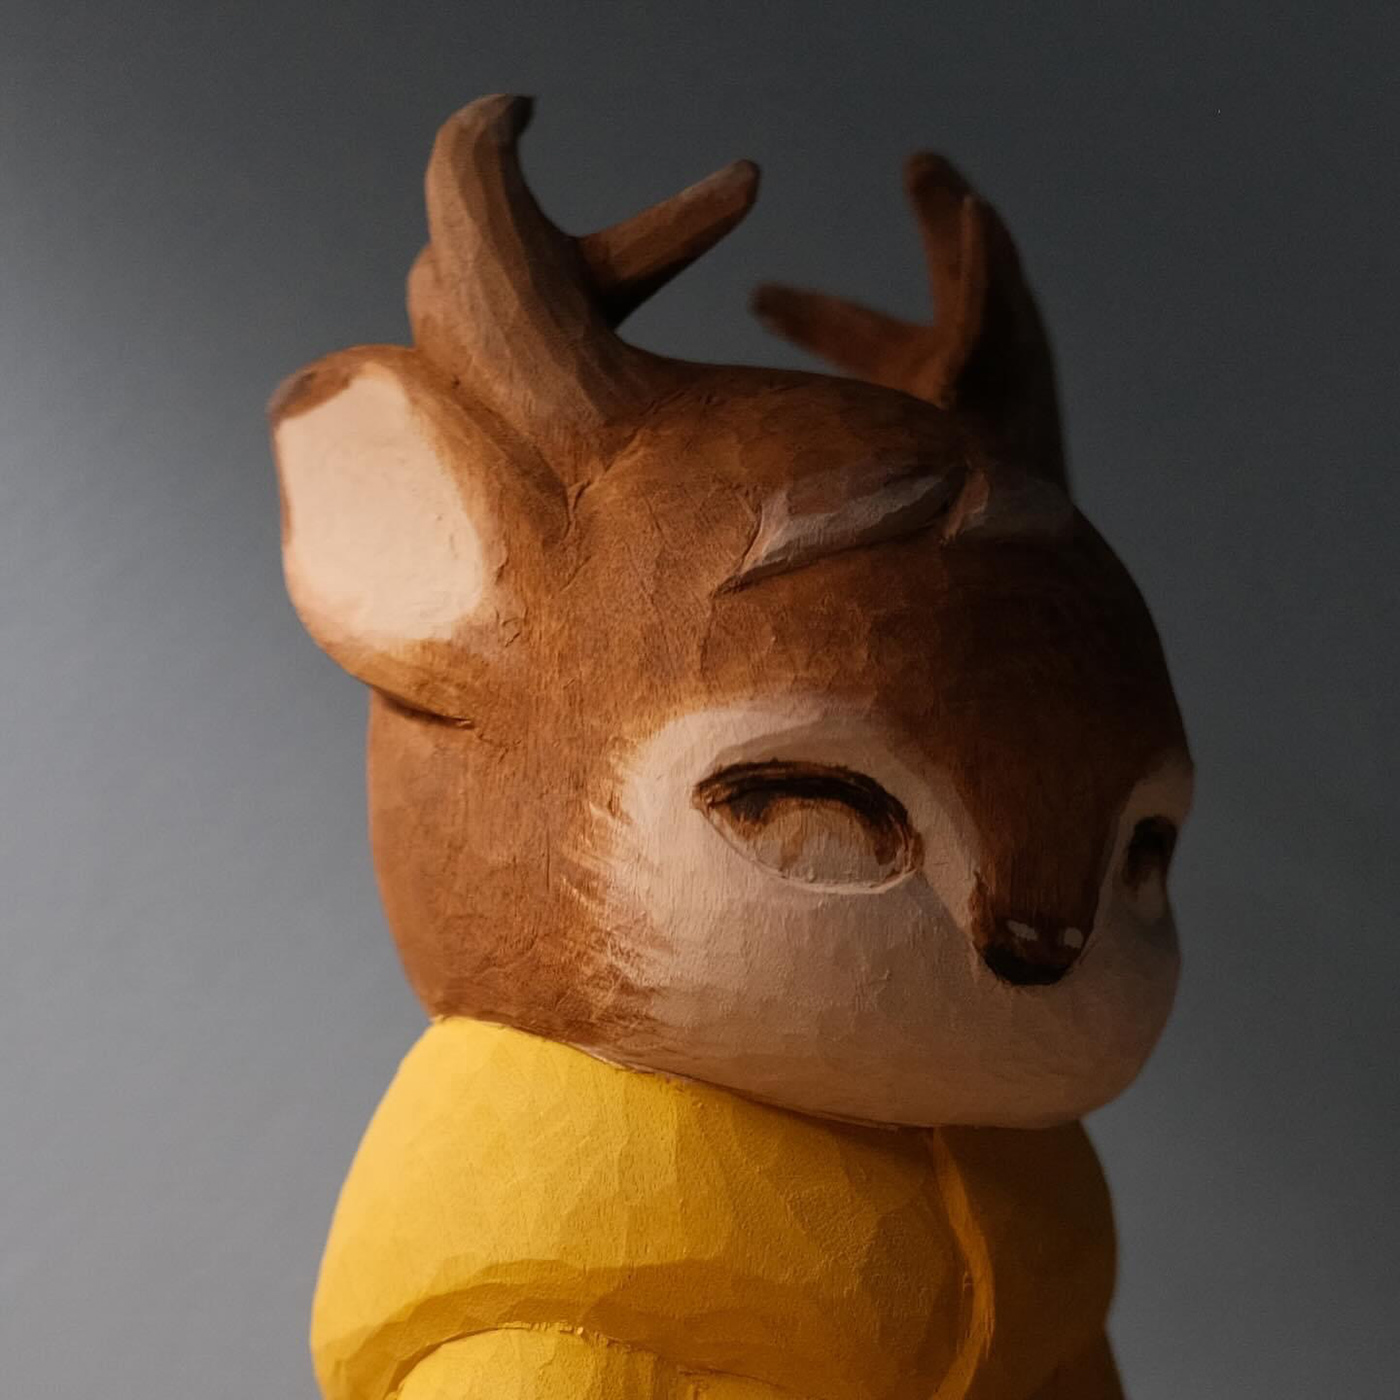 wood carving wood design art toy animal art deer wood sculpture